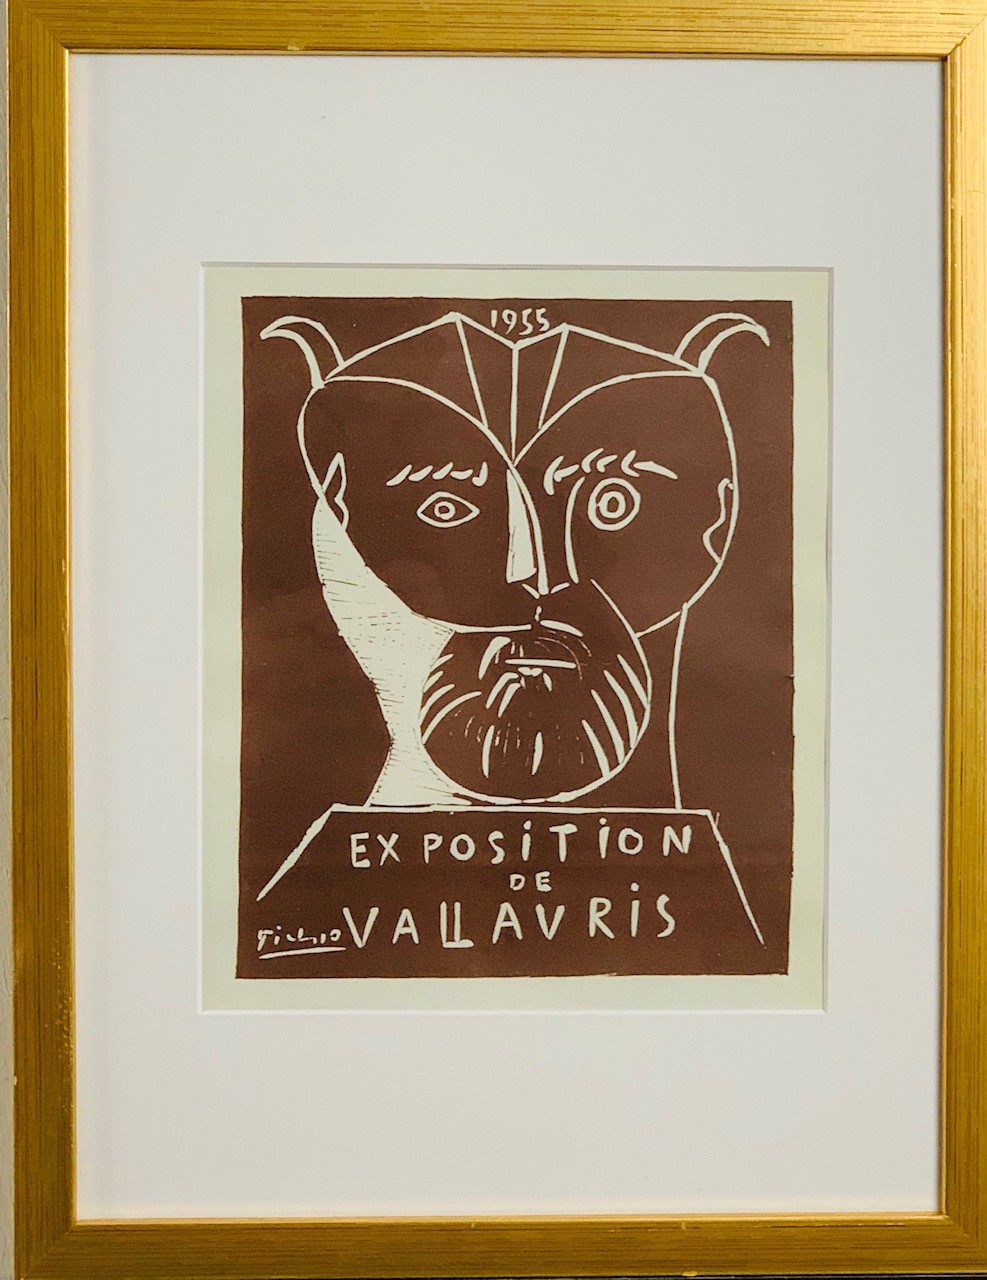 EXPOSITION DE VALLAURIS 1955